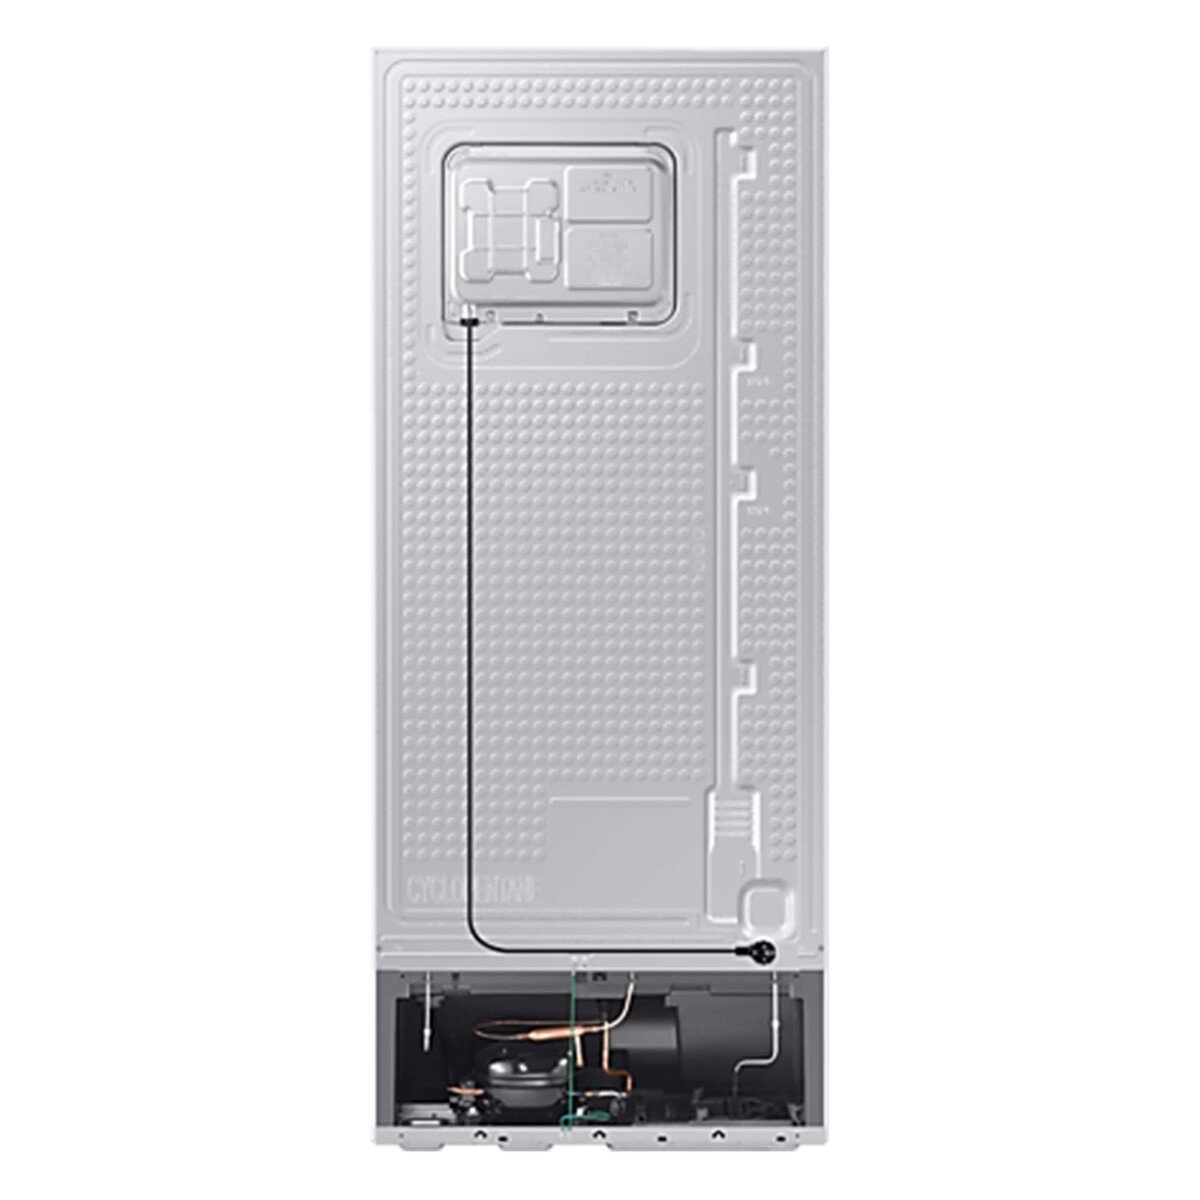 Samsung Double Door Refrigerator RT38CG6420W 388Ltr White